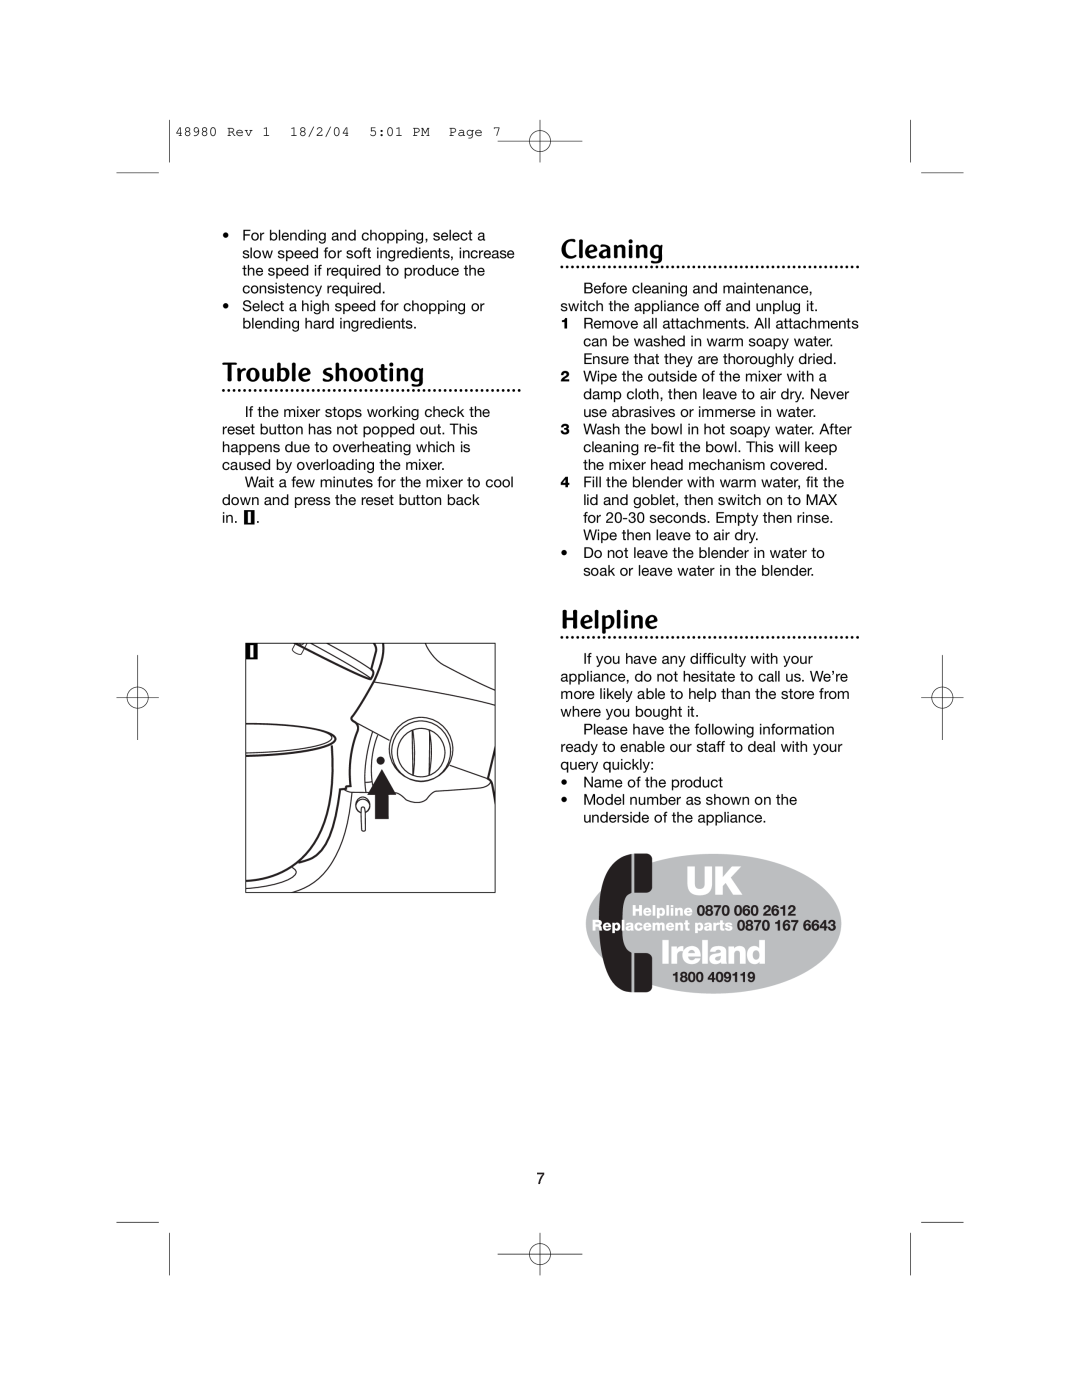 Morphy Richards Blender manual Trouble shooting, Cleaning, Helpline 